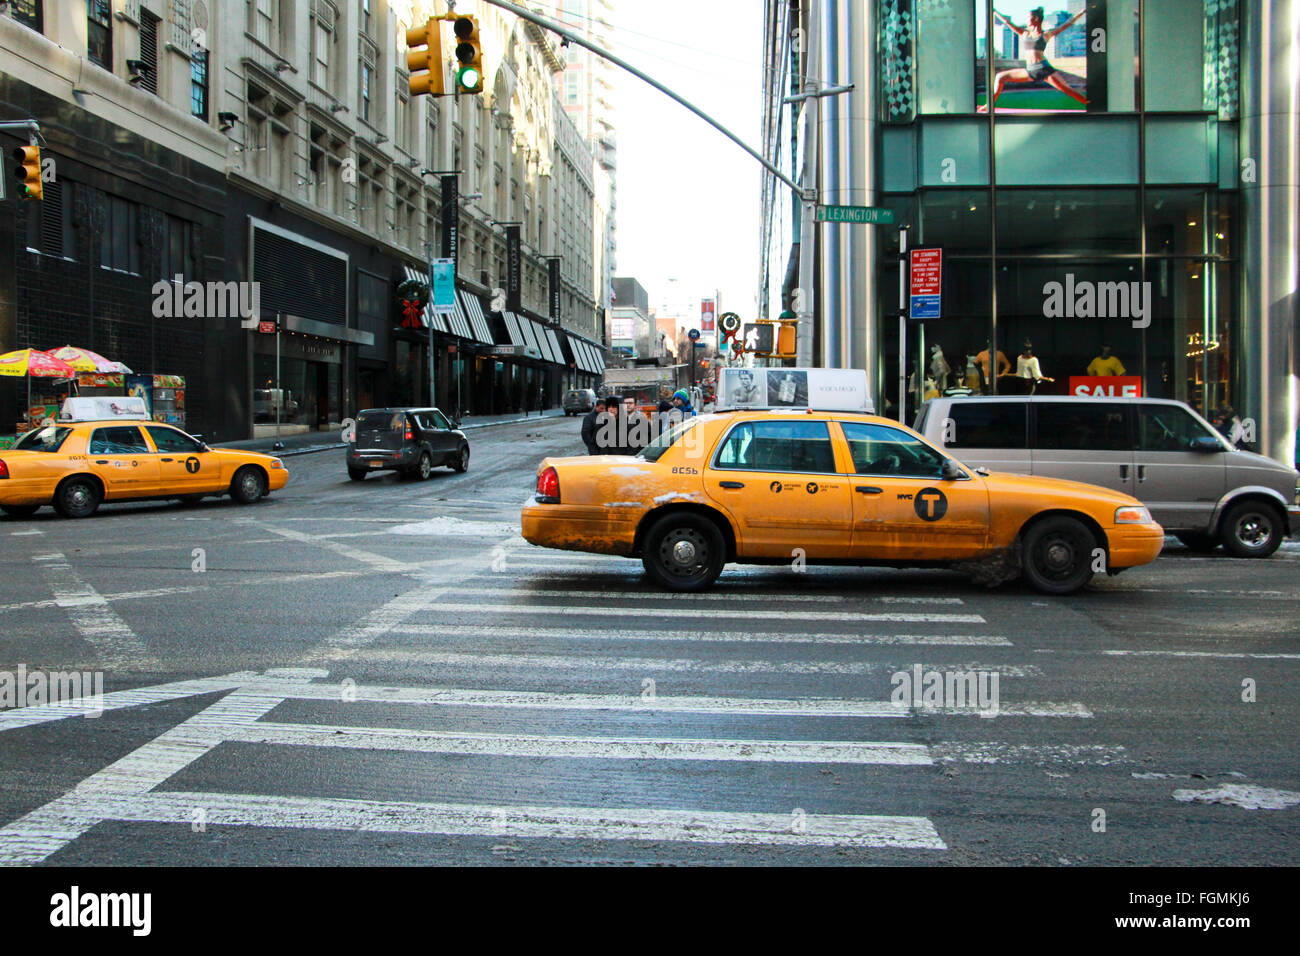 Yellow cab in new york city Stock Photo